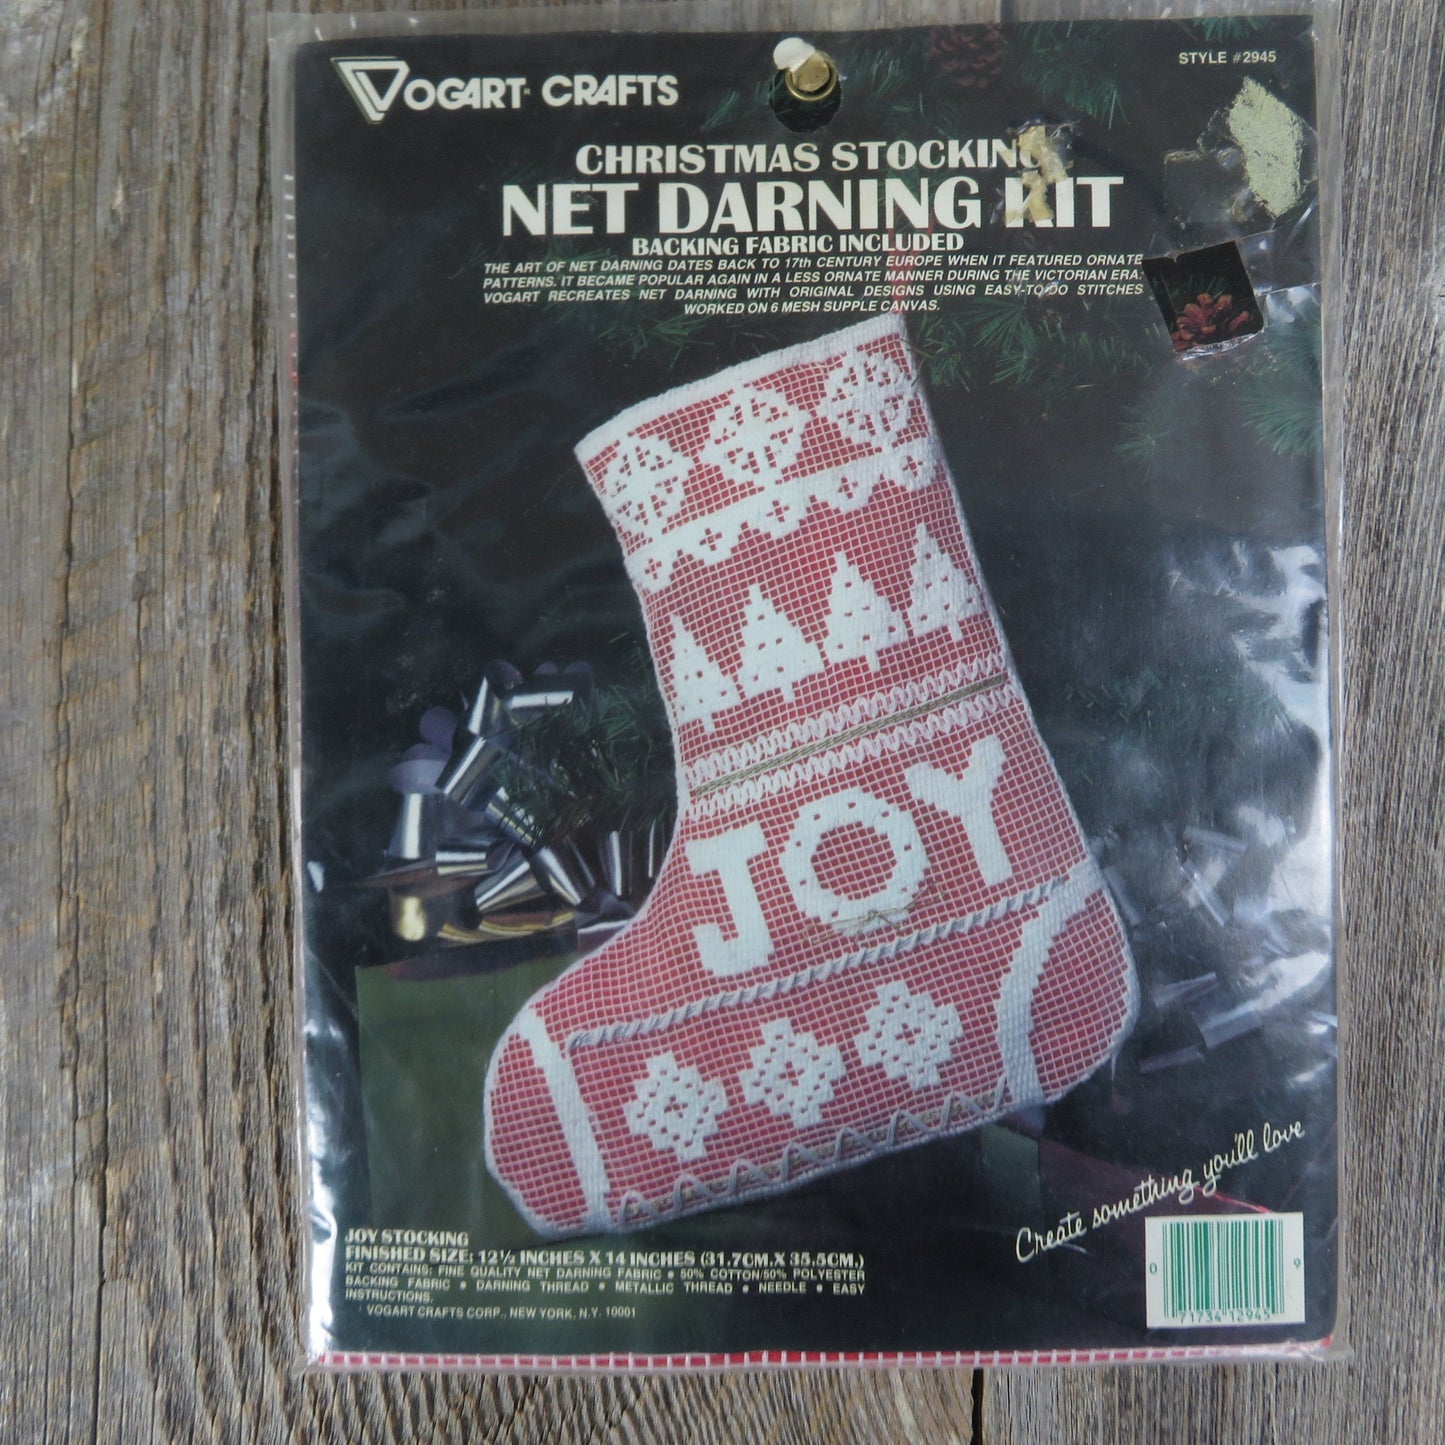 Vintage Christmas Stocking Lace Net Darning Kit Joy Vogart Crafts 2945 Filet Lace Embroidery Craft Kit White Red